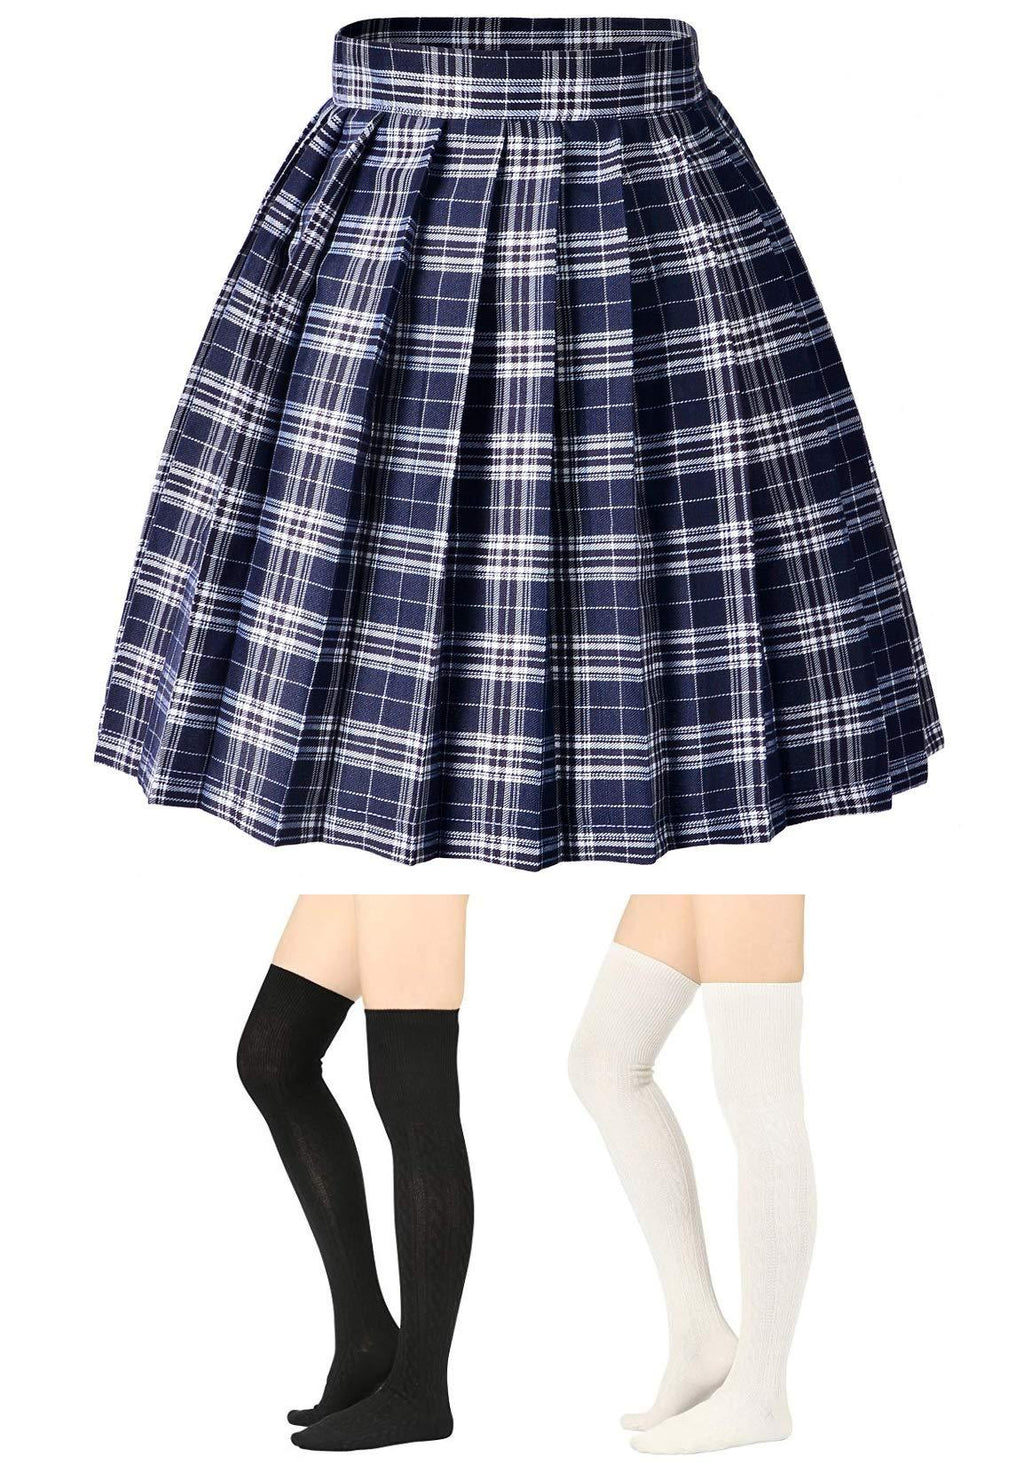 [Australia] - Elibelle Women's Japan High Waisted Tartan Pleated Dance Cosplay Costumes Skirt with Socks X-Small Black White Checks 